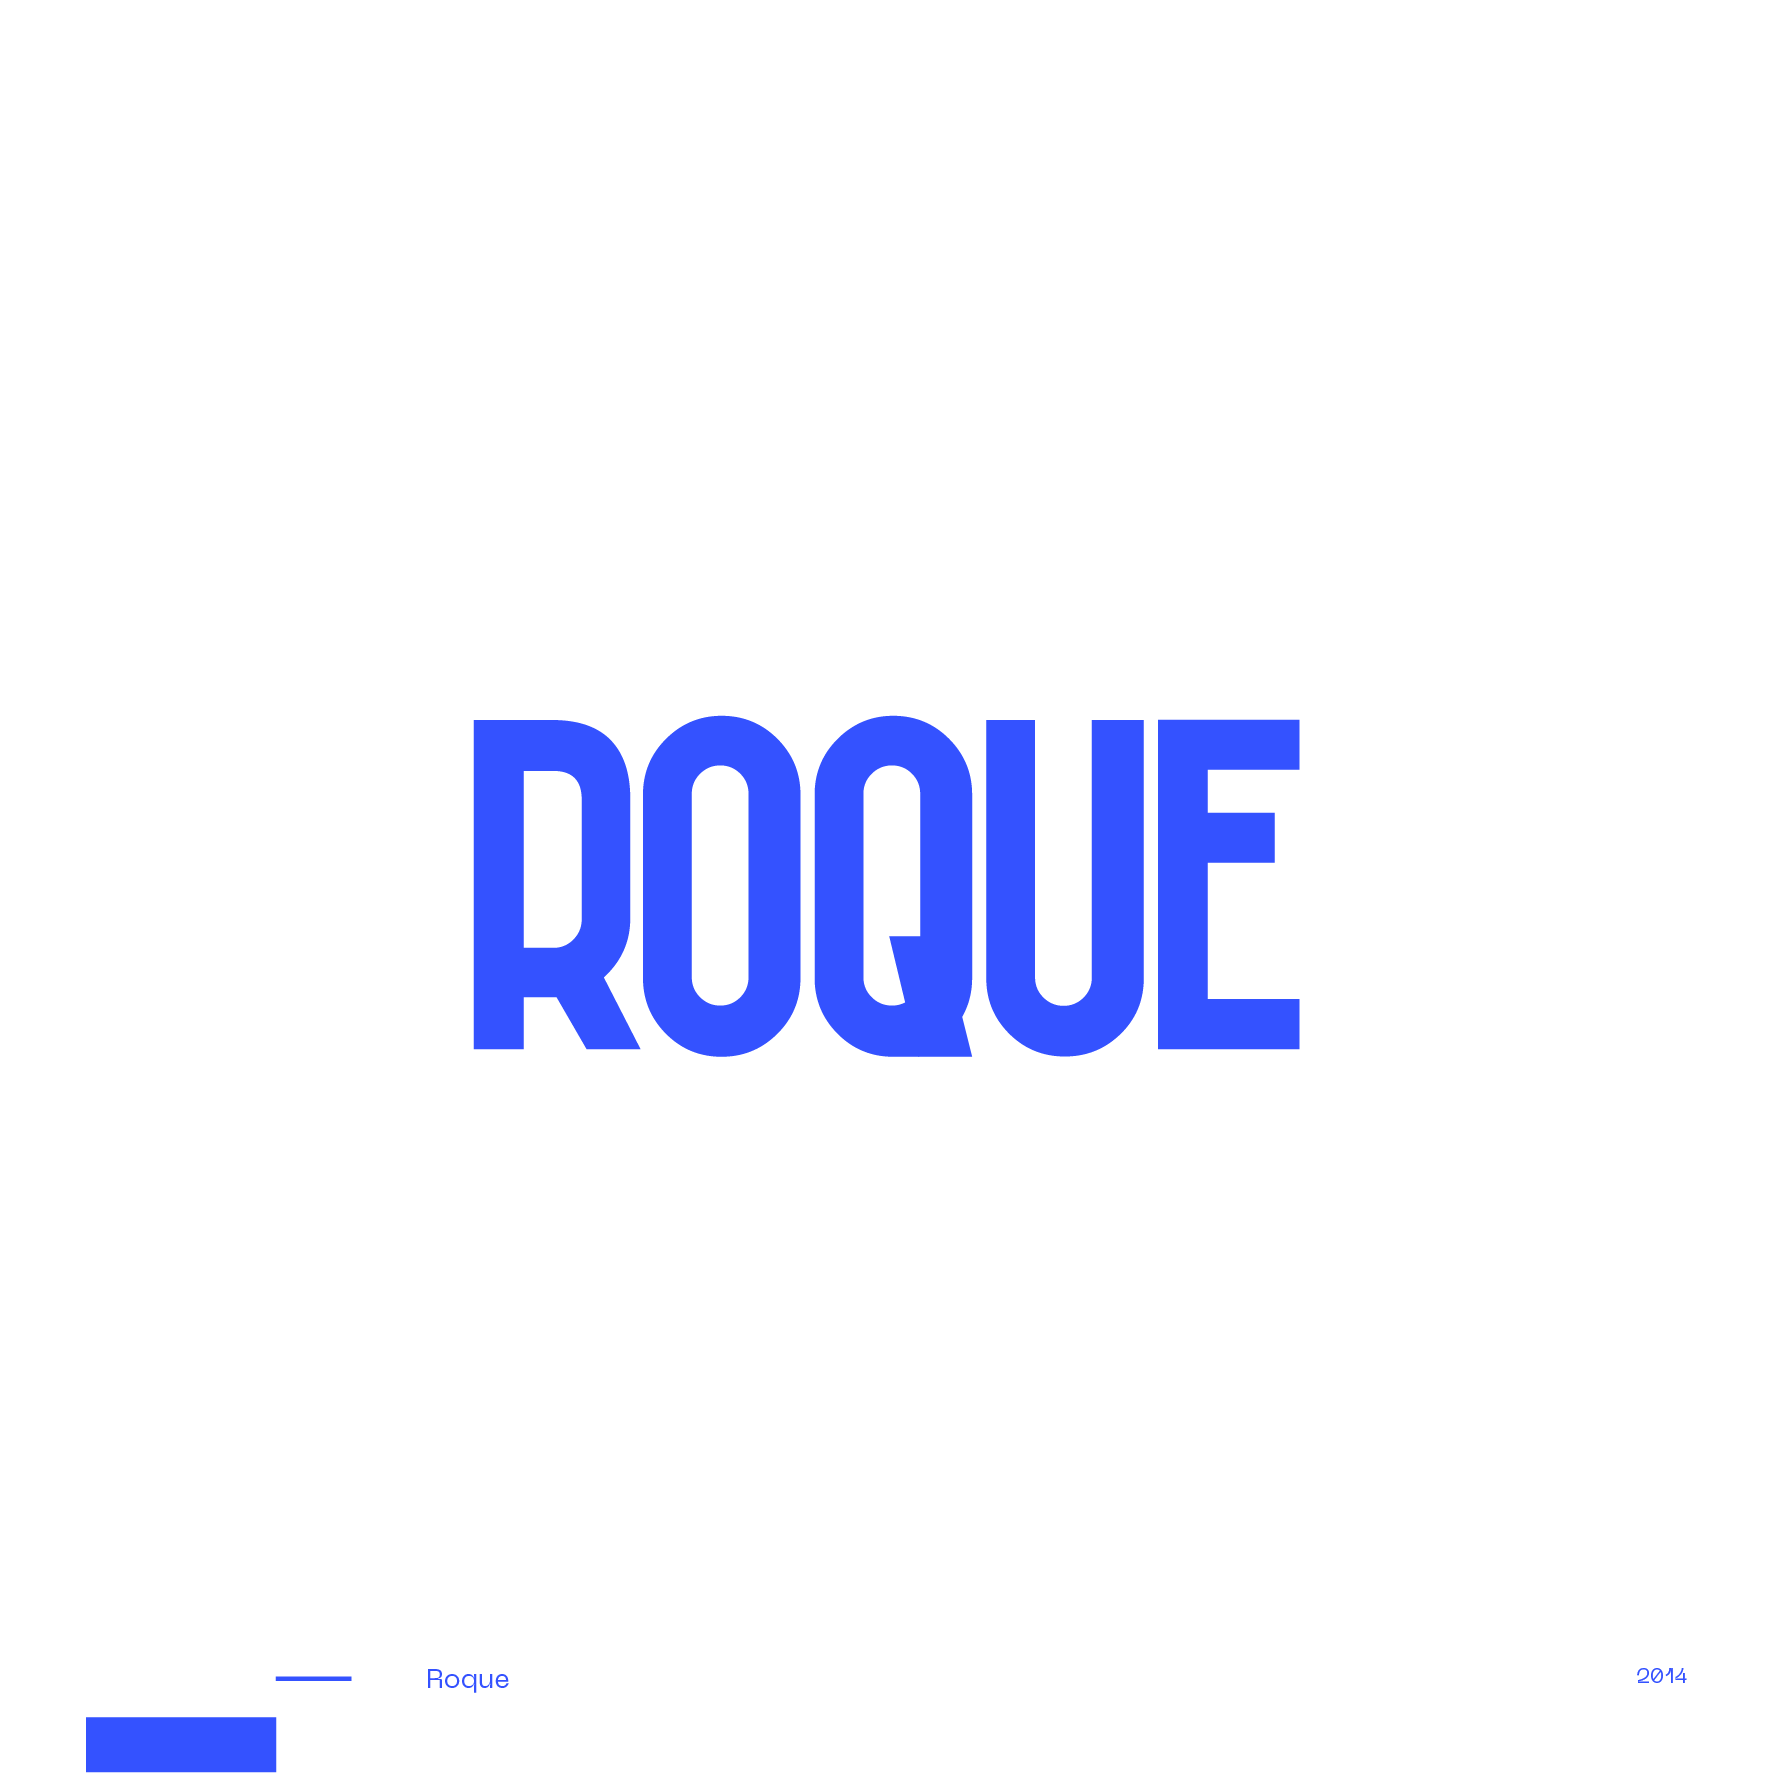 Guapo_Design_Studio_Logotype_Collection_Roque